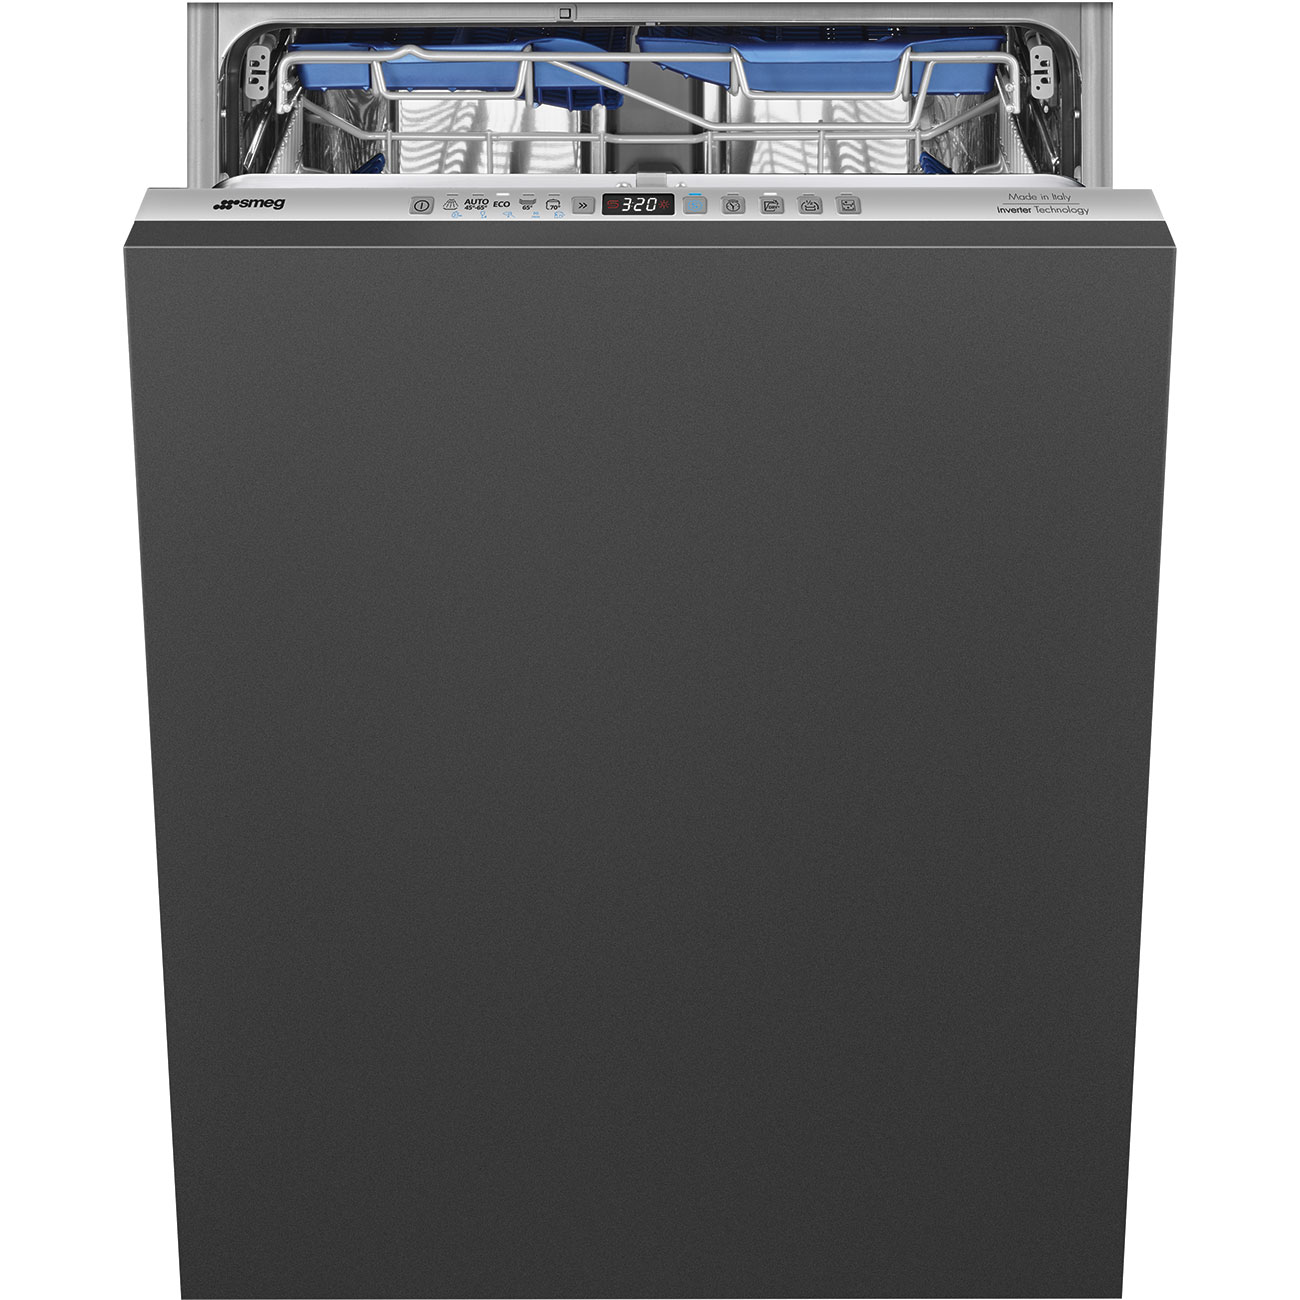 Встраиваемая посудомоечная машина Smeg STL323BL встраиваемая посудомоечная машина bomann gspe 7415 vi